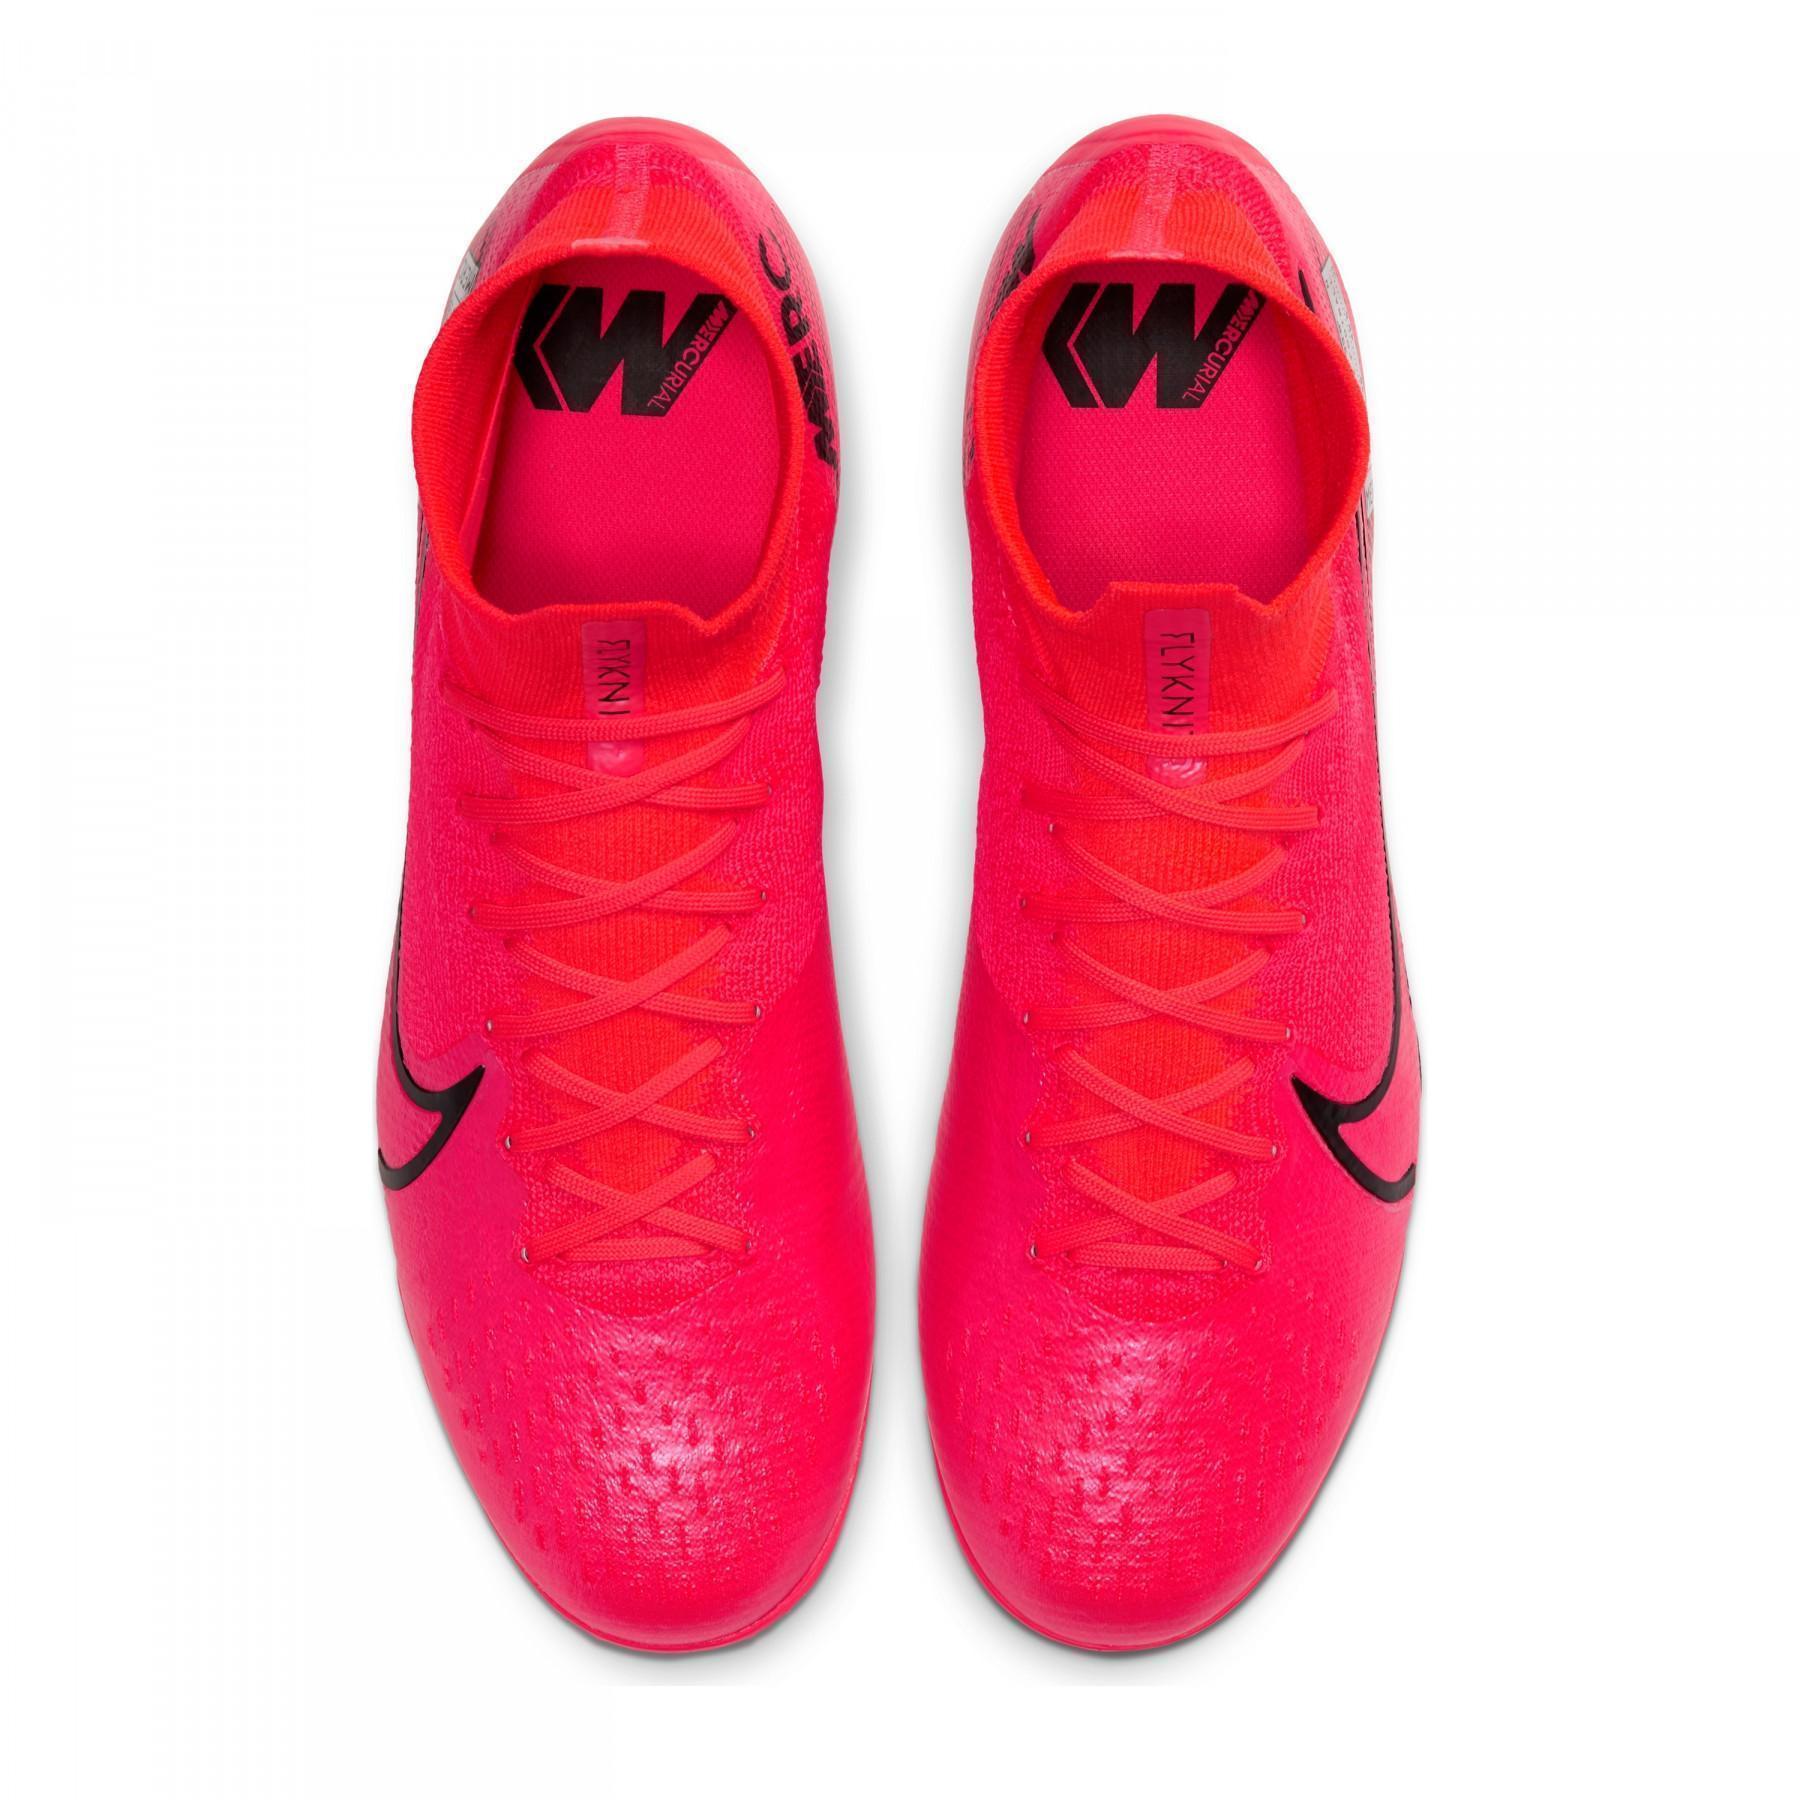 Zapatos Nike Mercurial Superfly 7 Elite TF